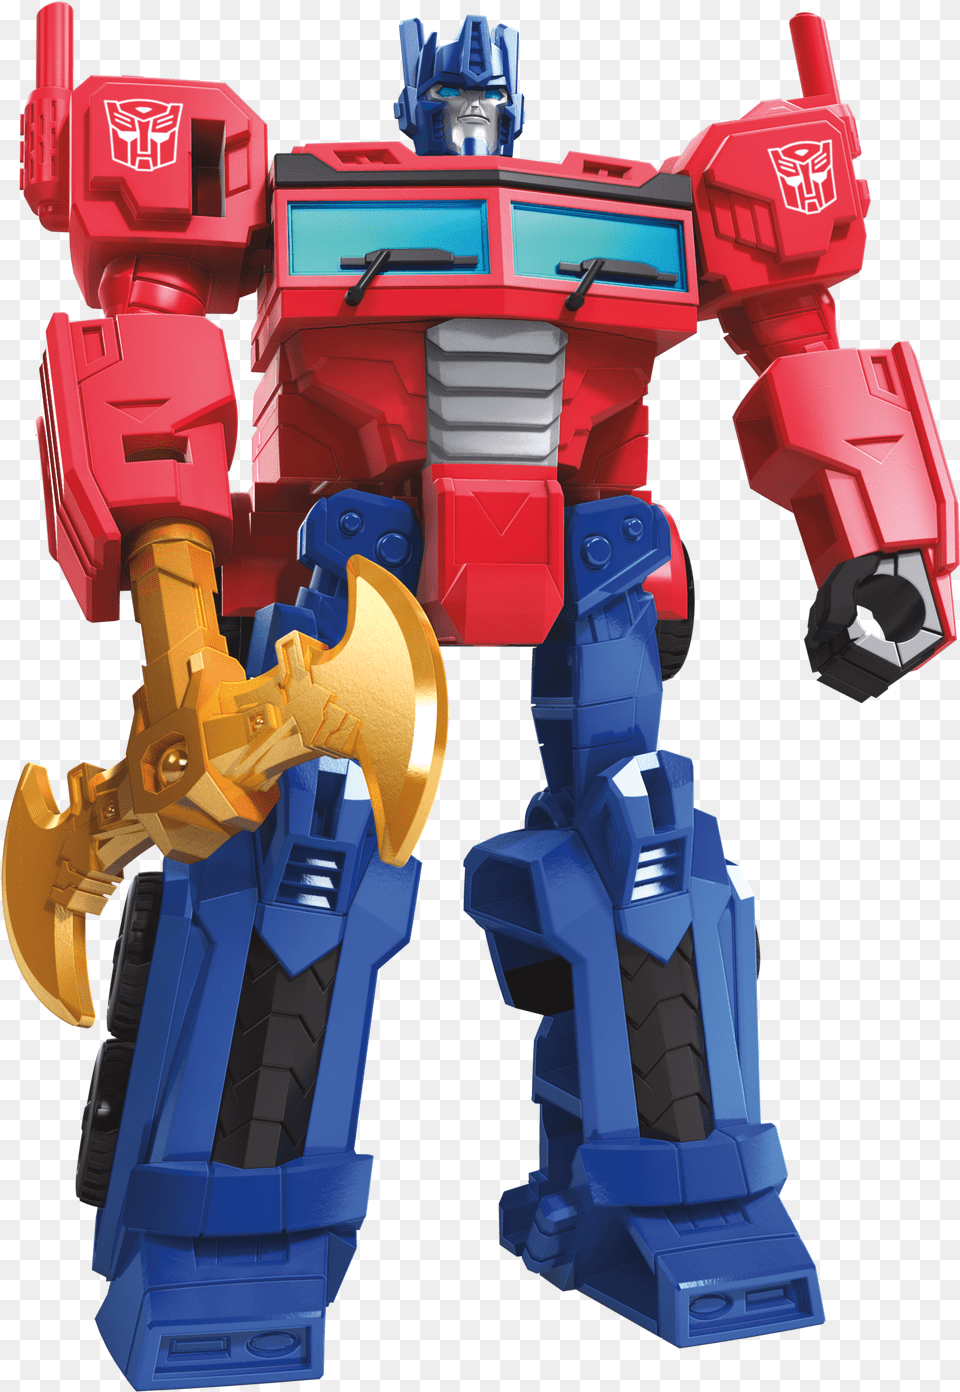 Scout Class Optimus Prime Transformers Cyberverse Scout Class Optimus Prime, Toy, Robot Png Image